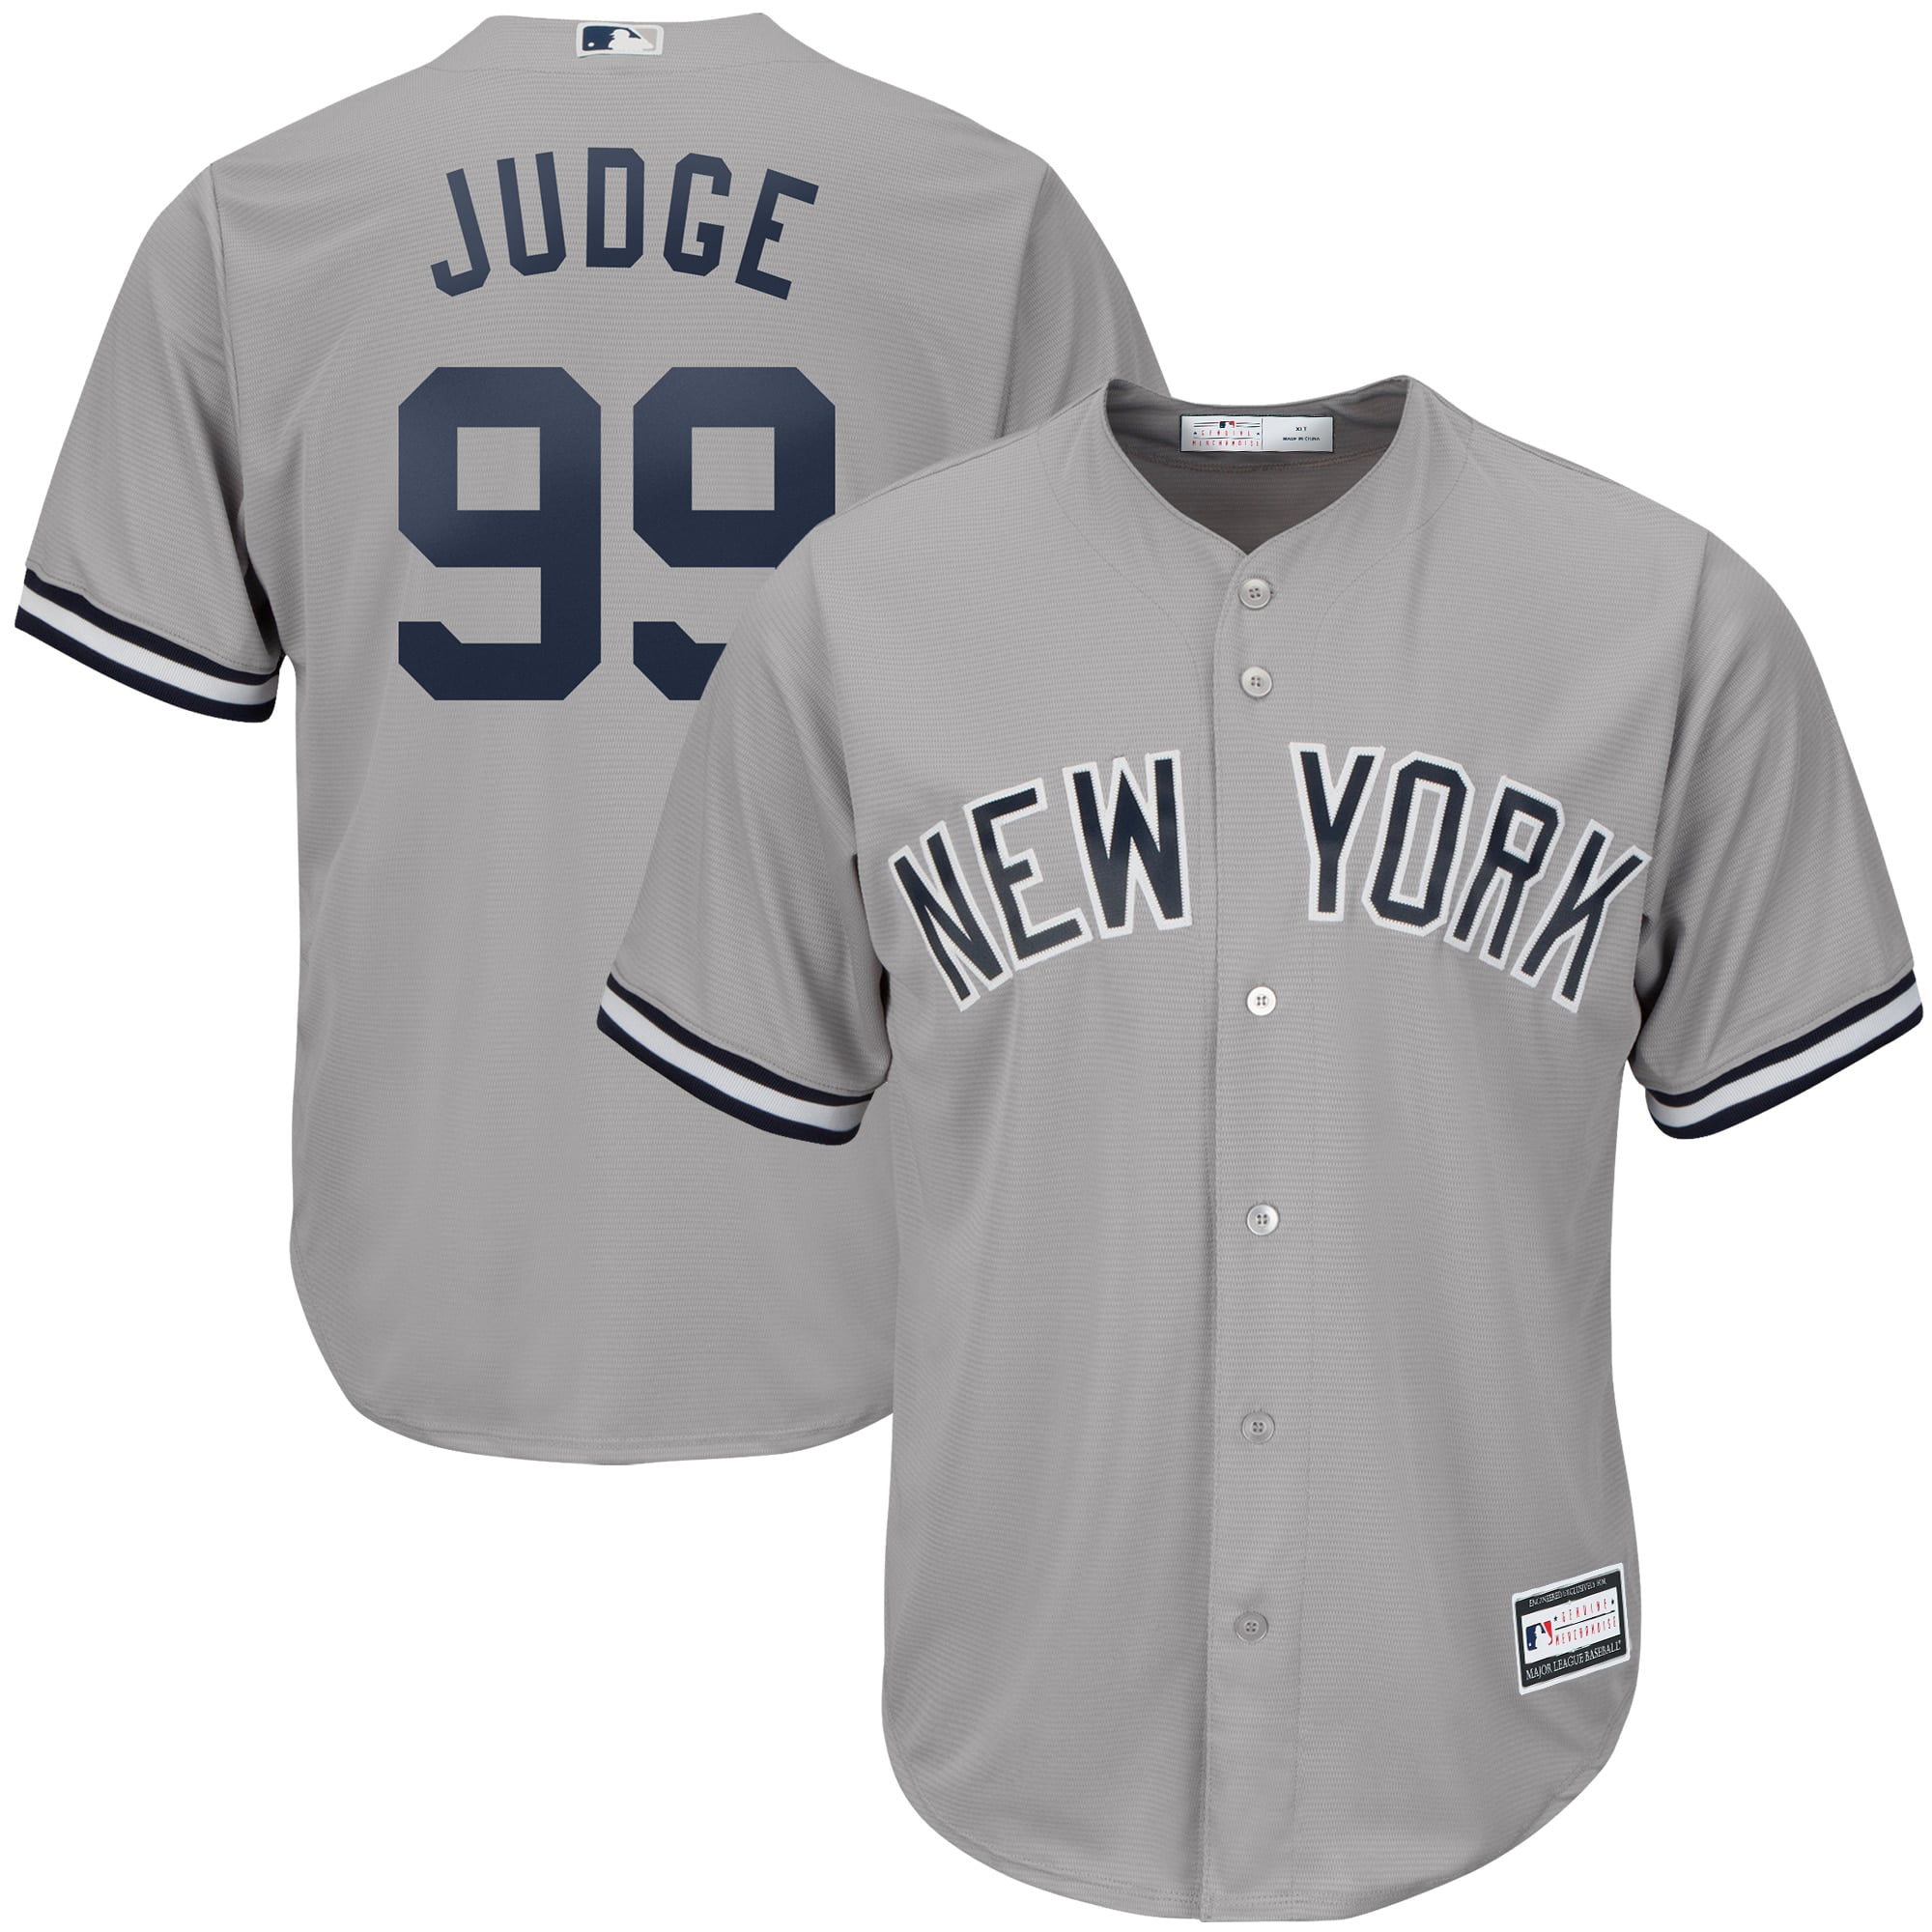 aaron judge jersey for sale